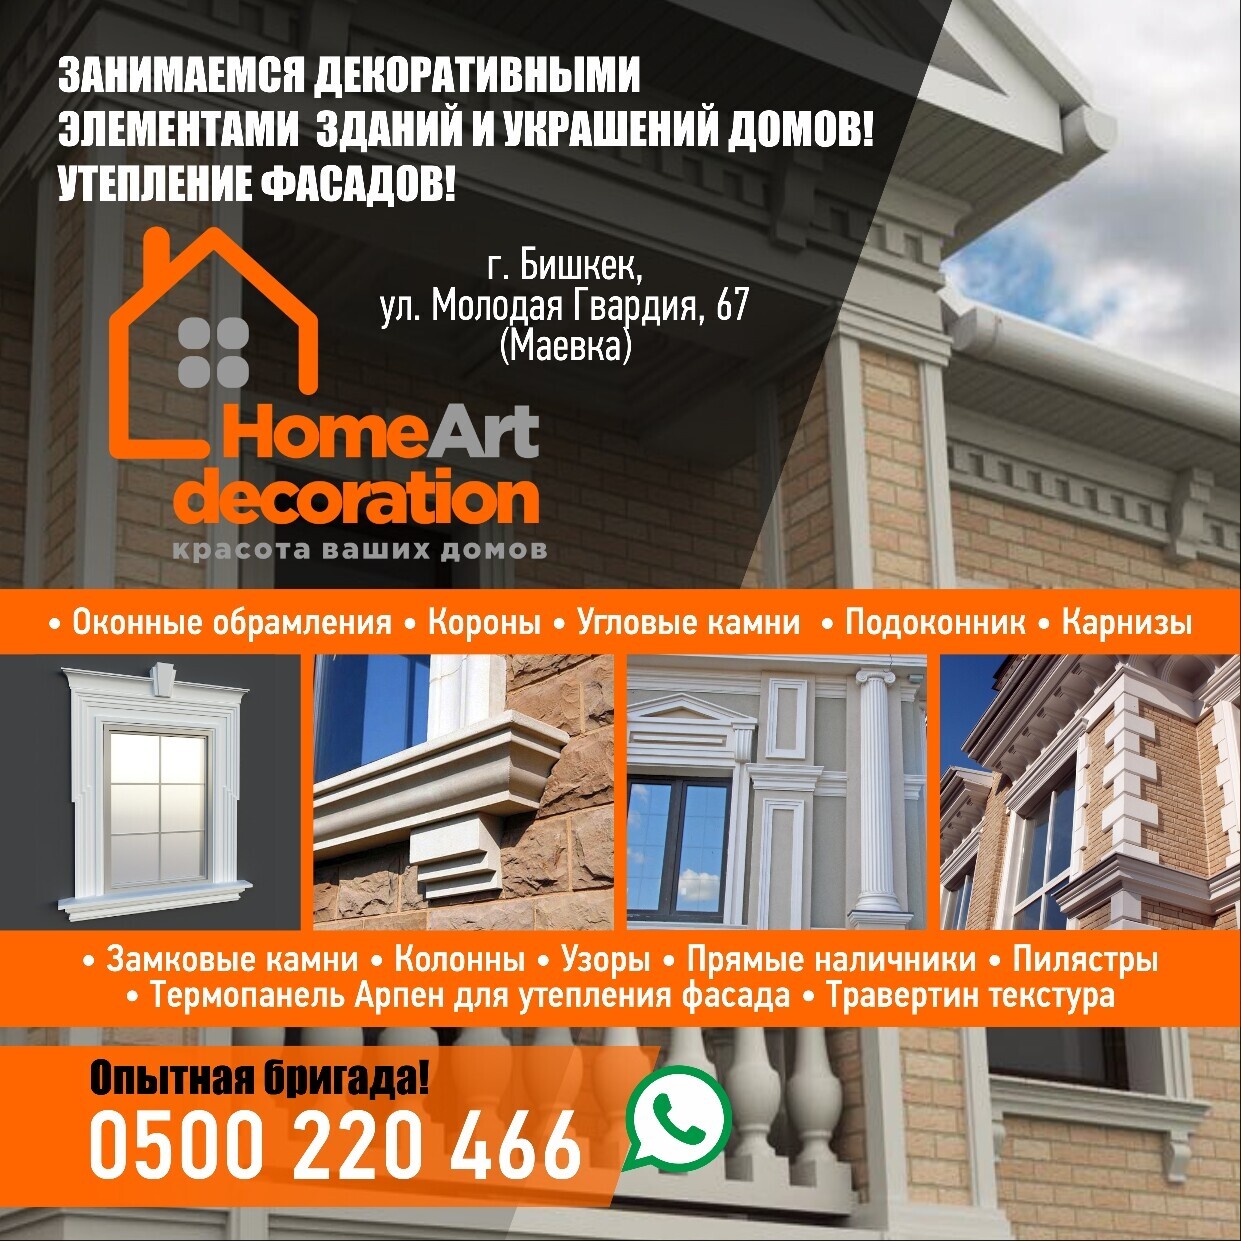 HomeArt decoration ➤ Кыргызстан ᐉ Бизнес-профиль компании на lalafo.kg